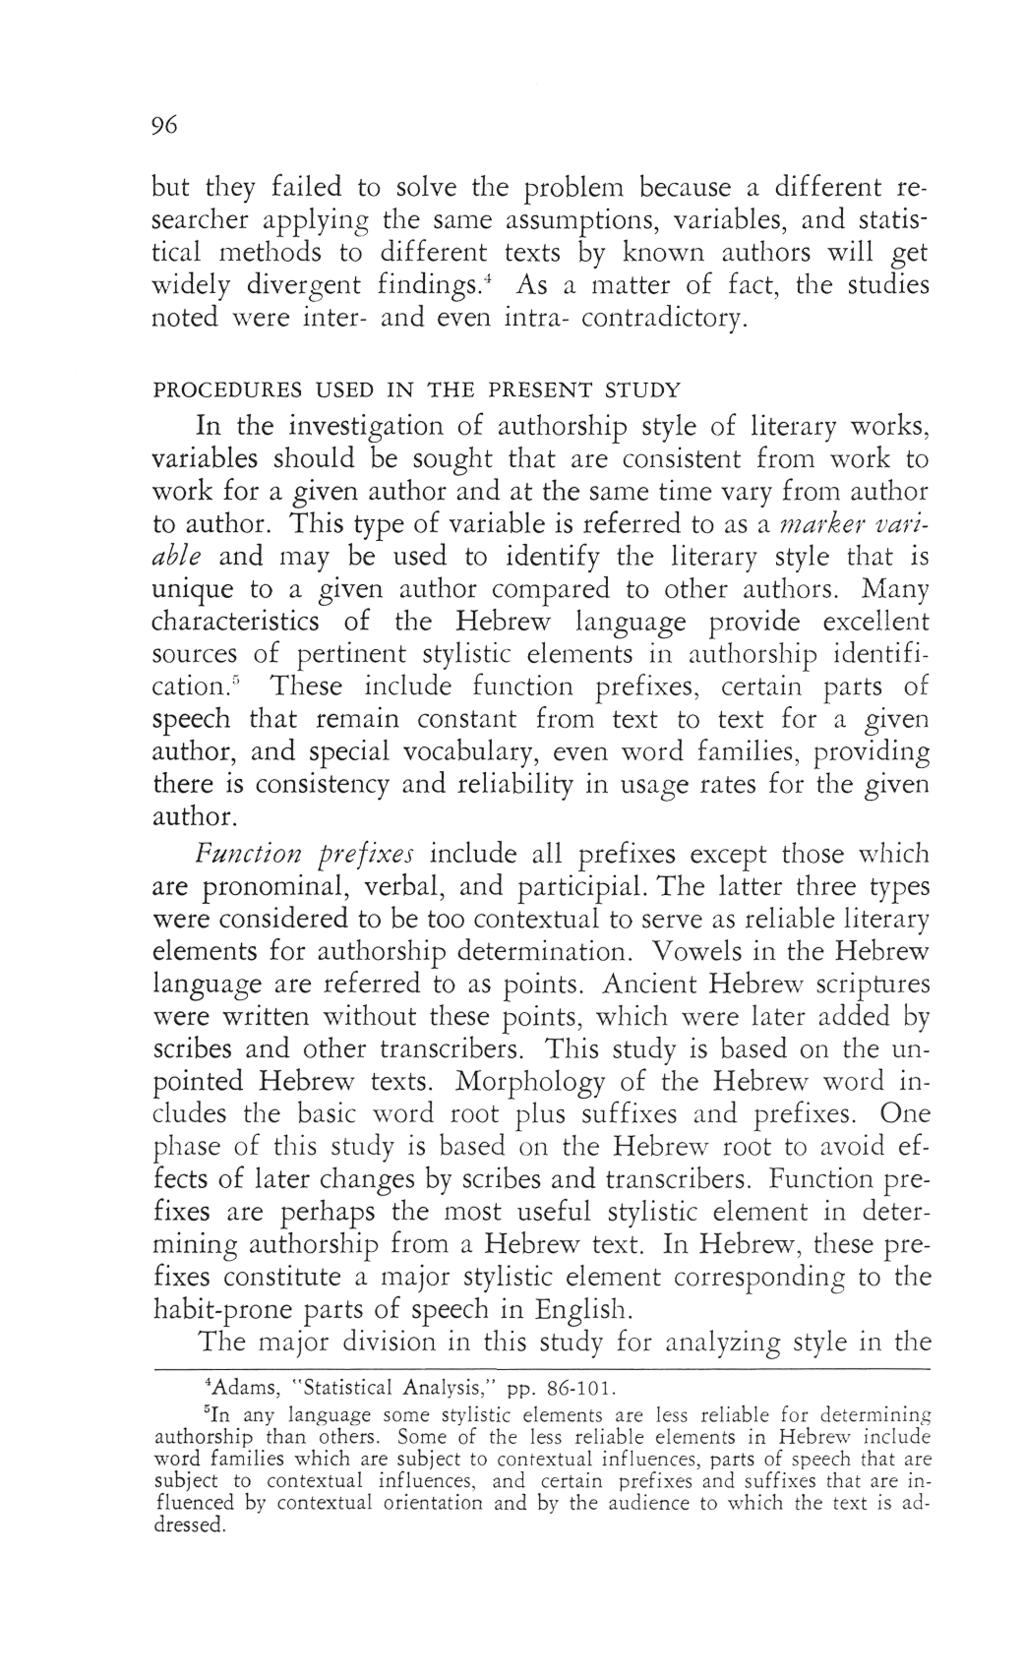 BYU Studes Quarterly, Vol. 5, Iss. [975], Art.